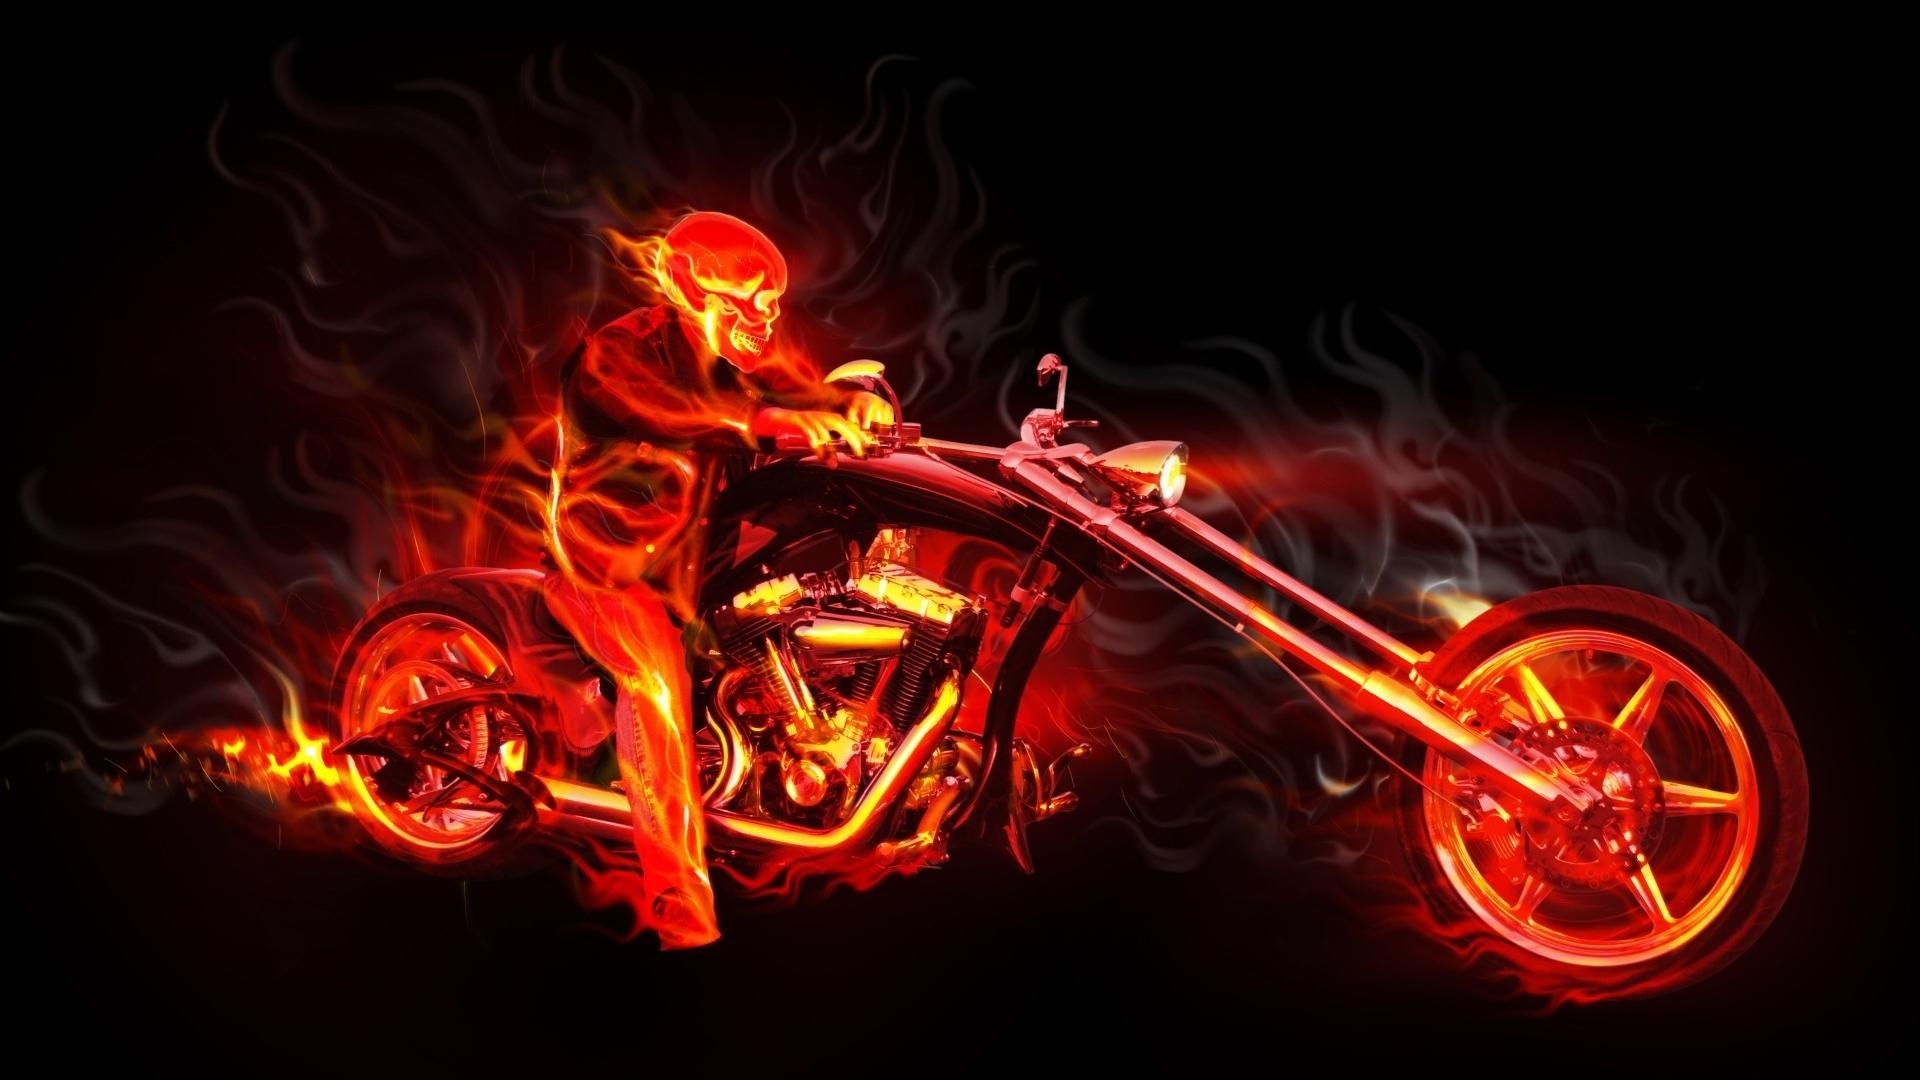 Motorcycle Flame Wallpaper 19202151080 123757 HD Wallpaper